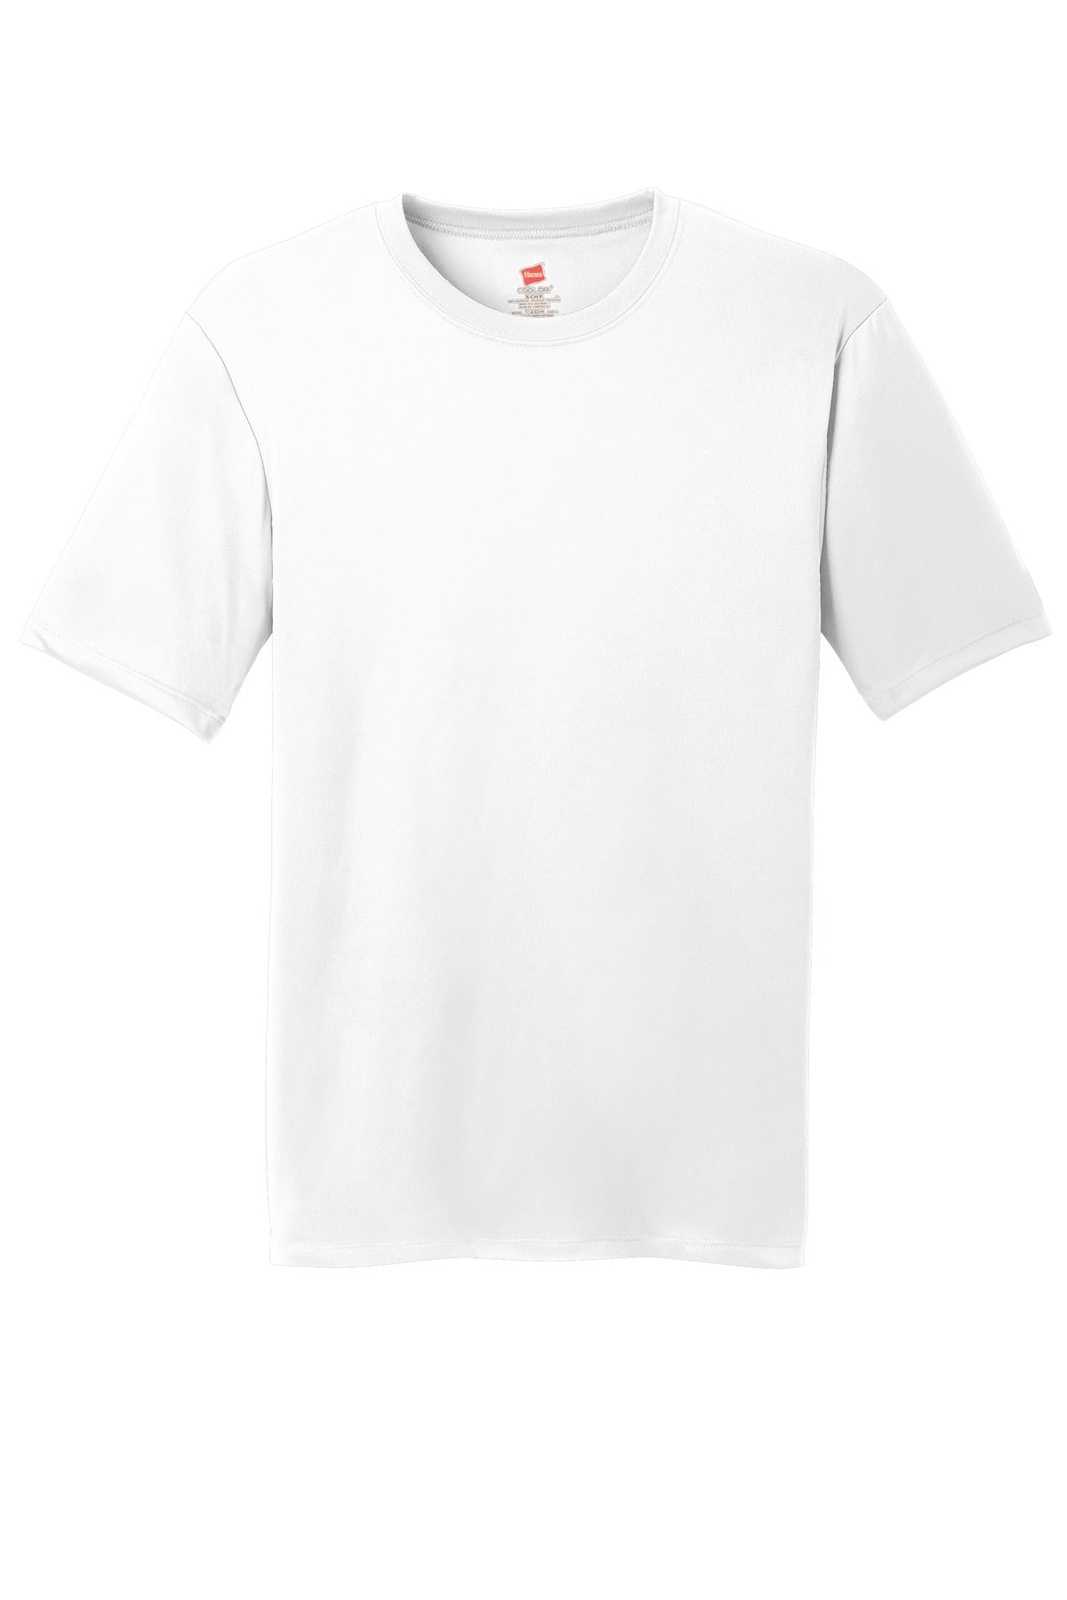 Hanes 4820 Cool Dri Performance T-Shirt - White - HIT a Double